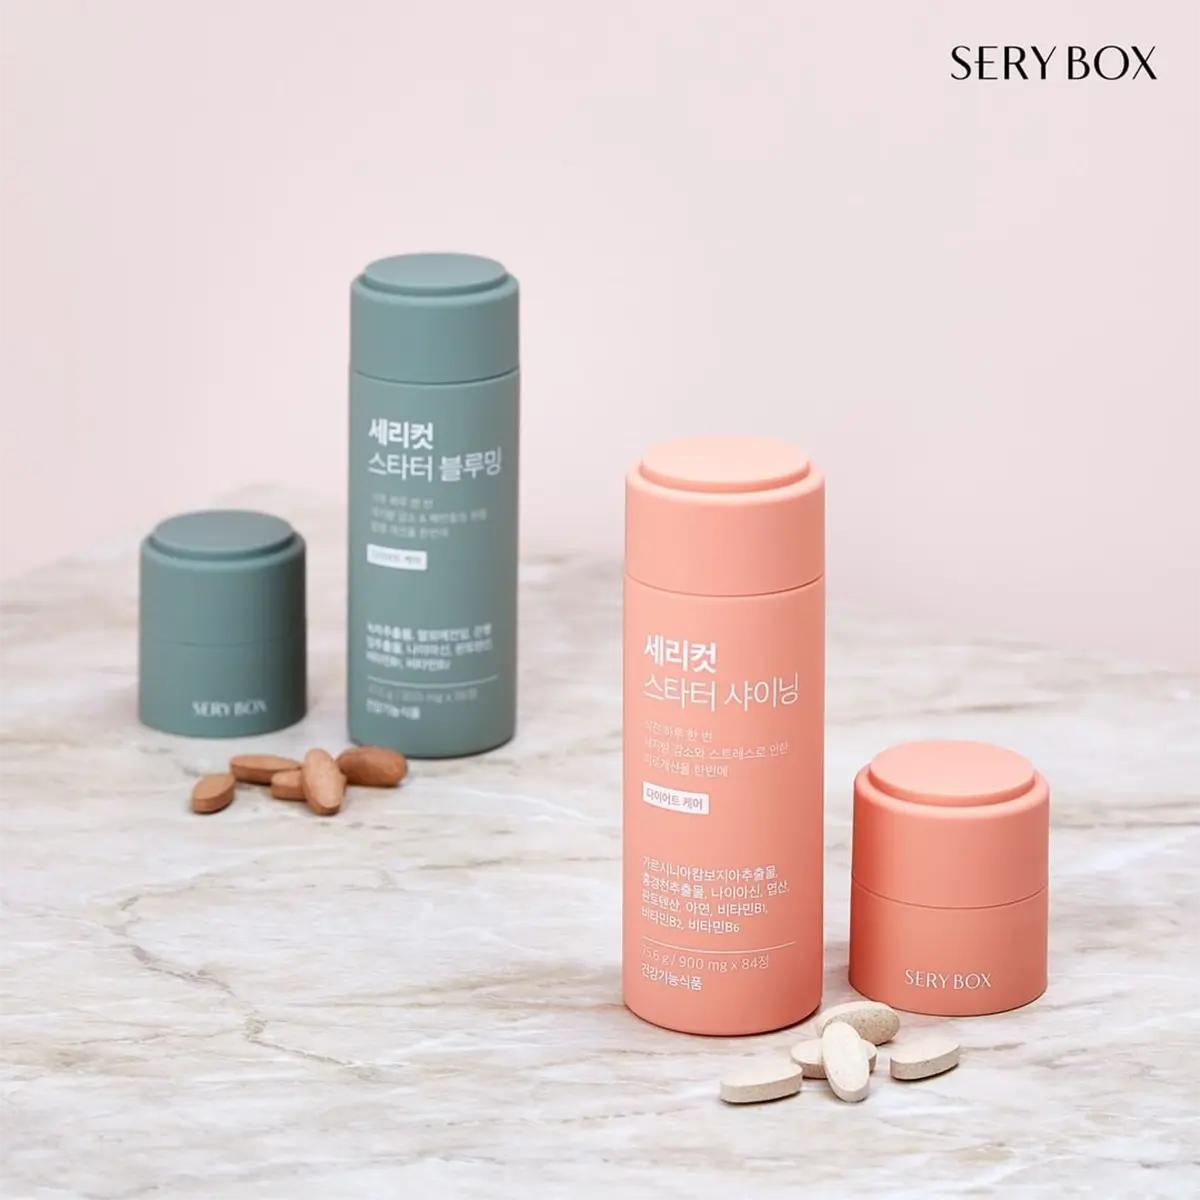 Serybox